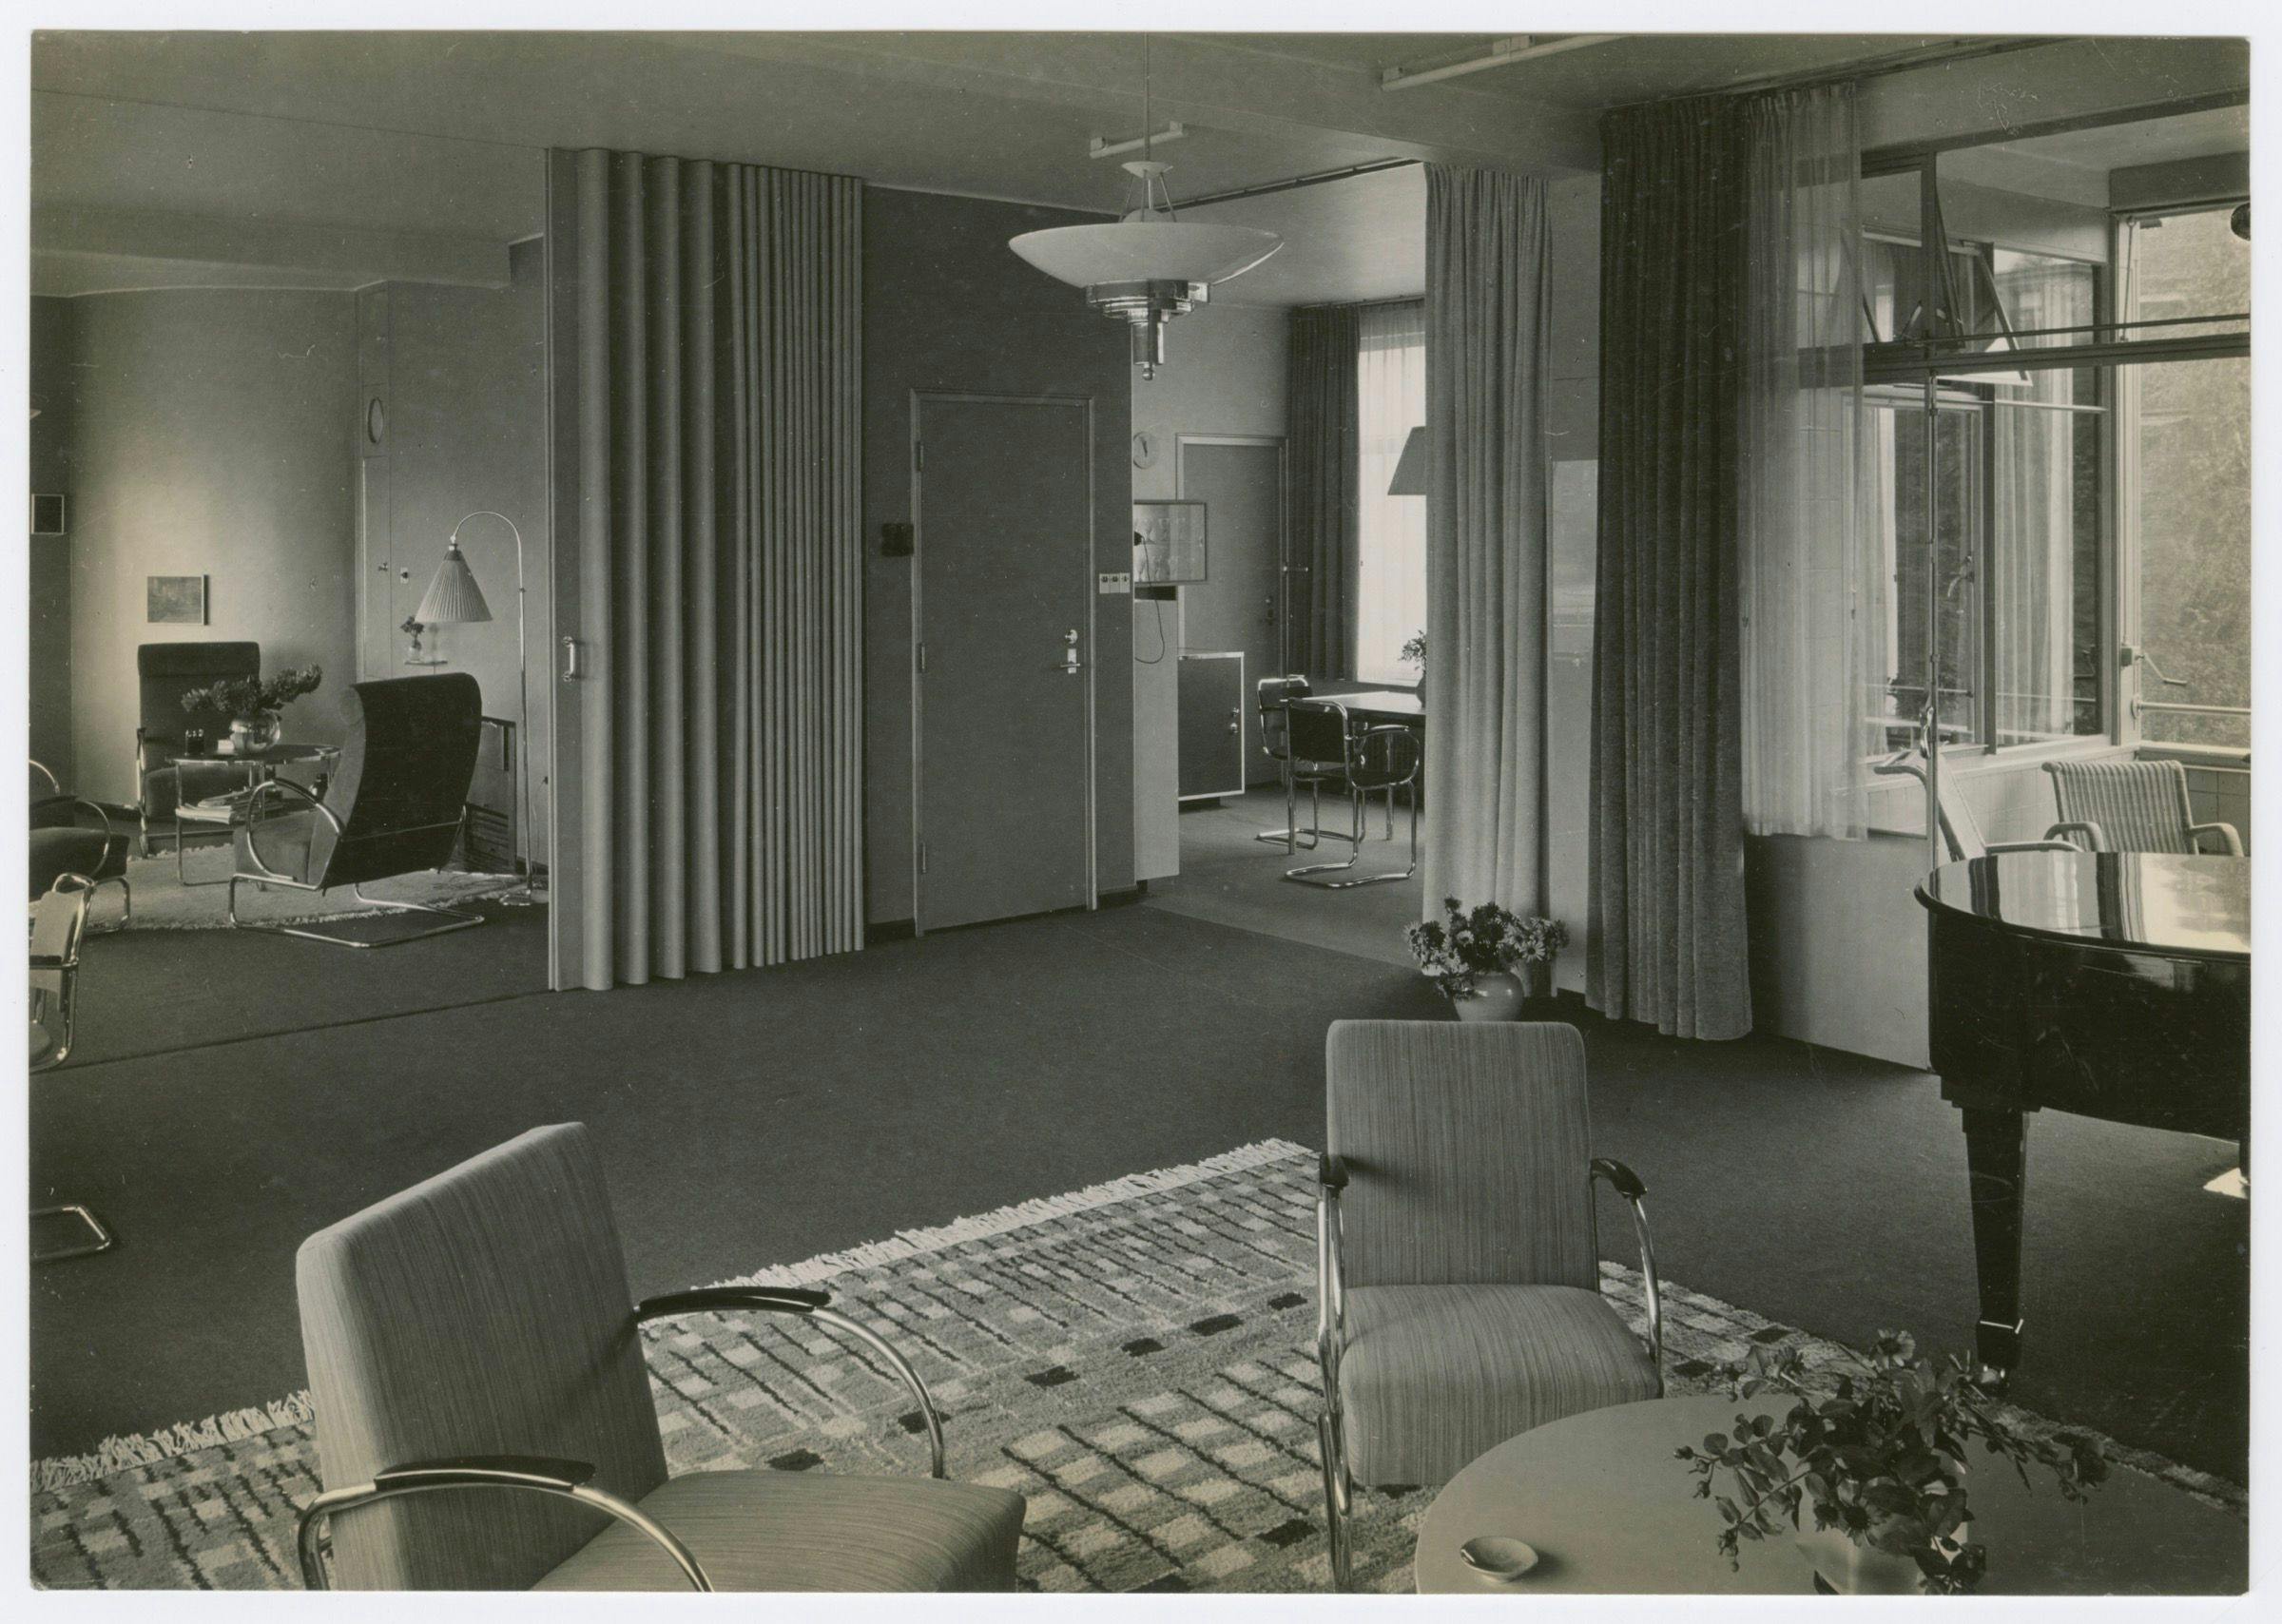 Sonneveld House interior, 1933. Photo Piet Zwart. Collection Het Nieuwe Instituut, SONN 34-14. Loan from BIHS